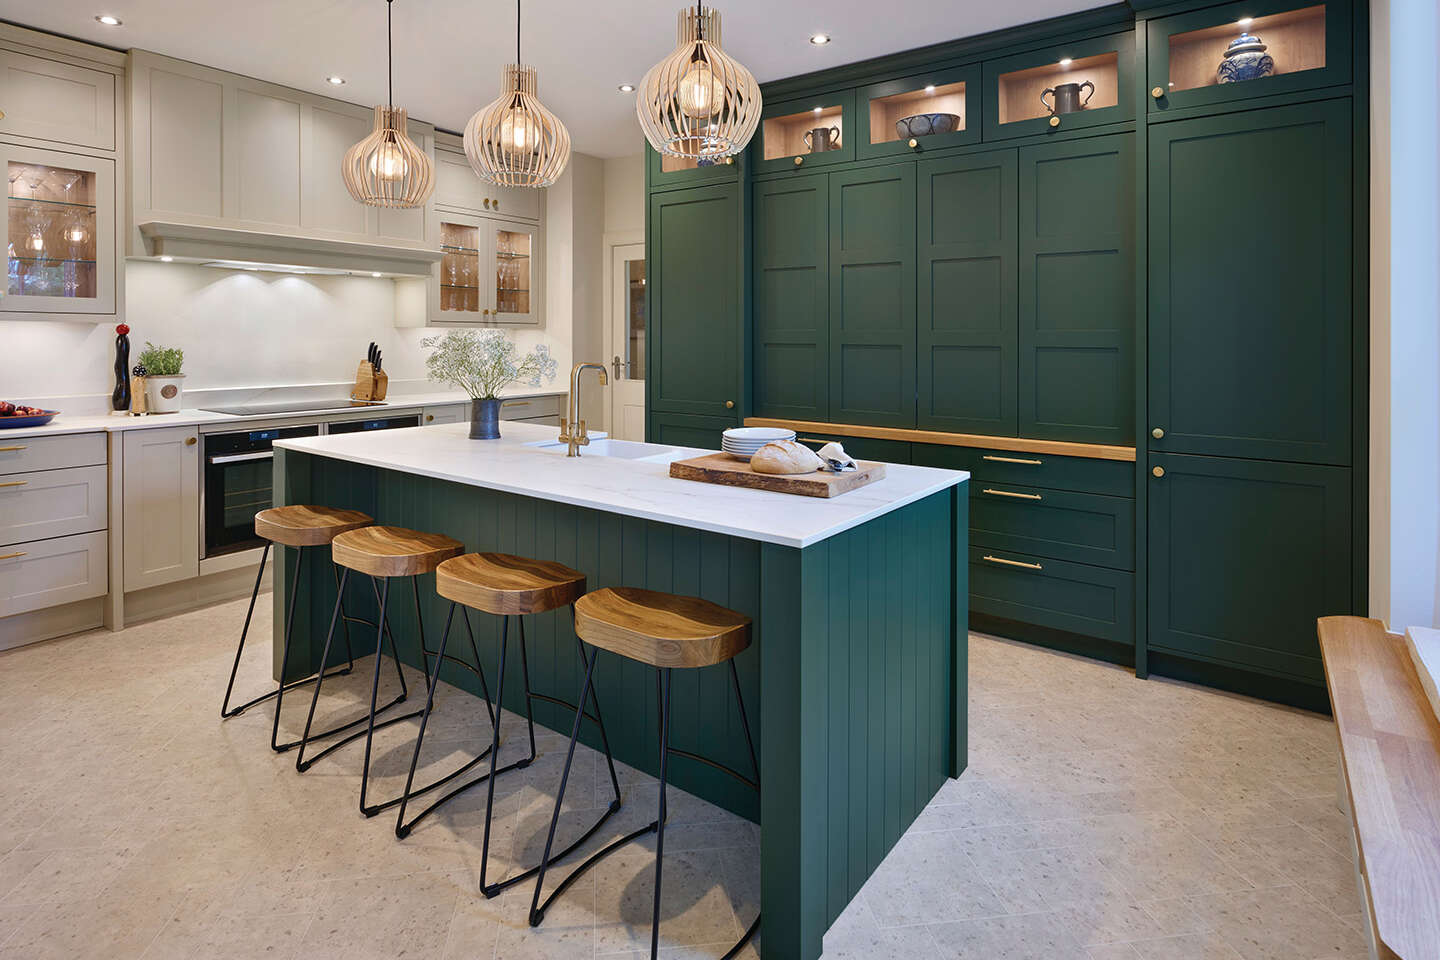 Green kitchen cupboards paired with white marble worktop featured in Callerton kitchen design